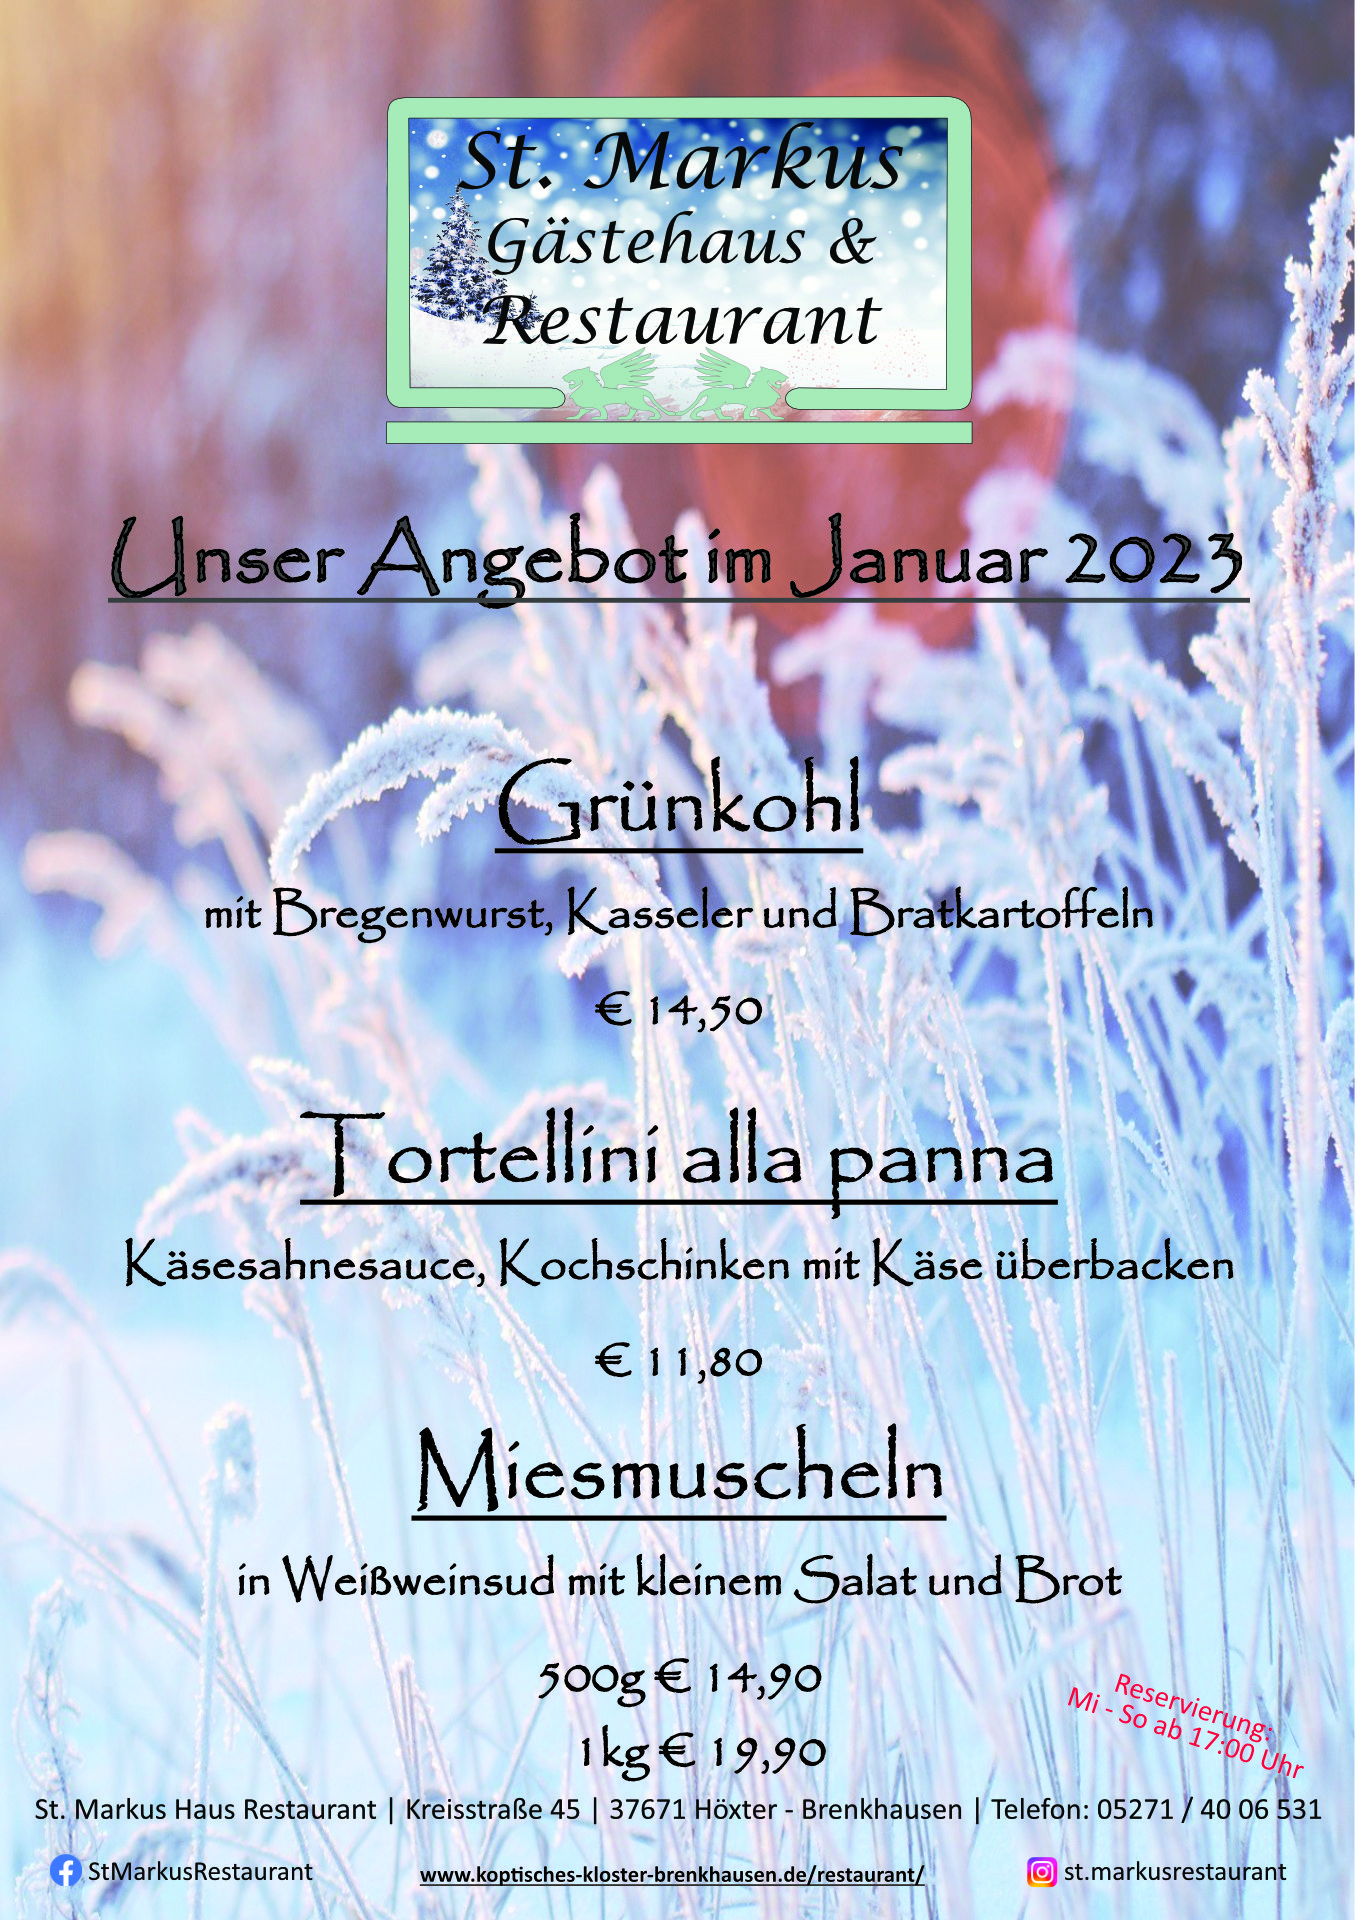 St. Markus Restaurant-Angebot im Januar 2023